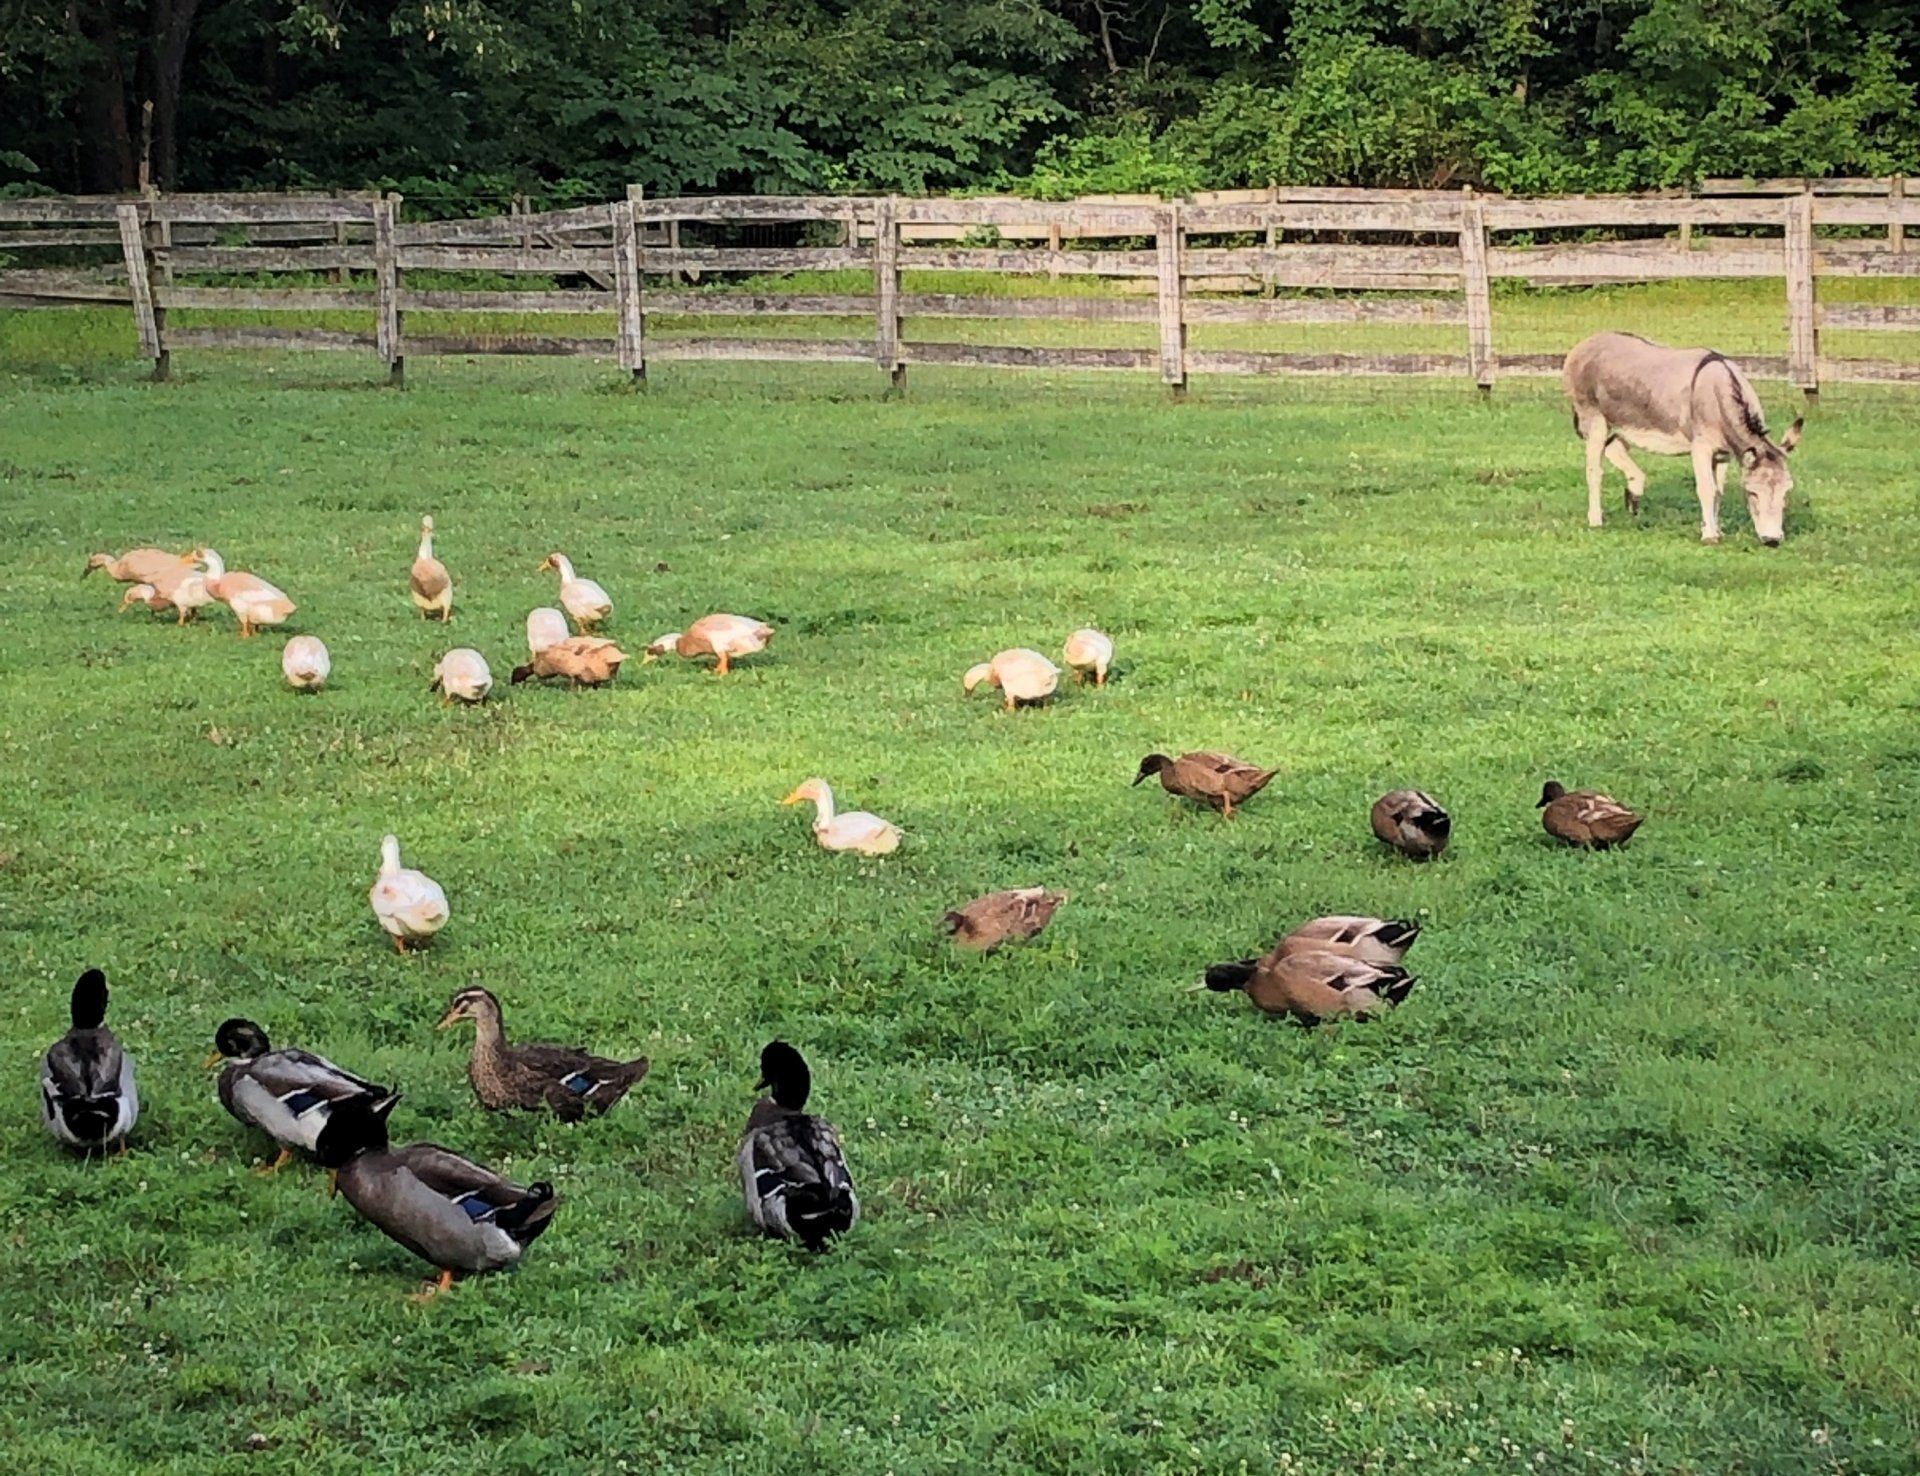 Ducks in a pasture